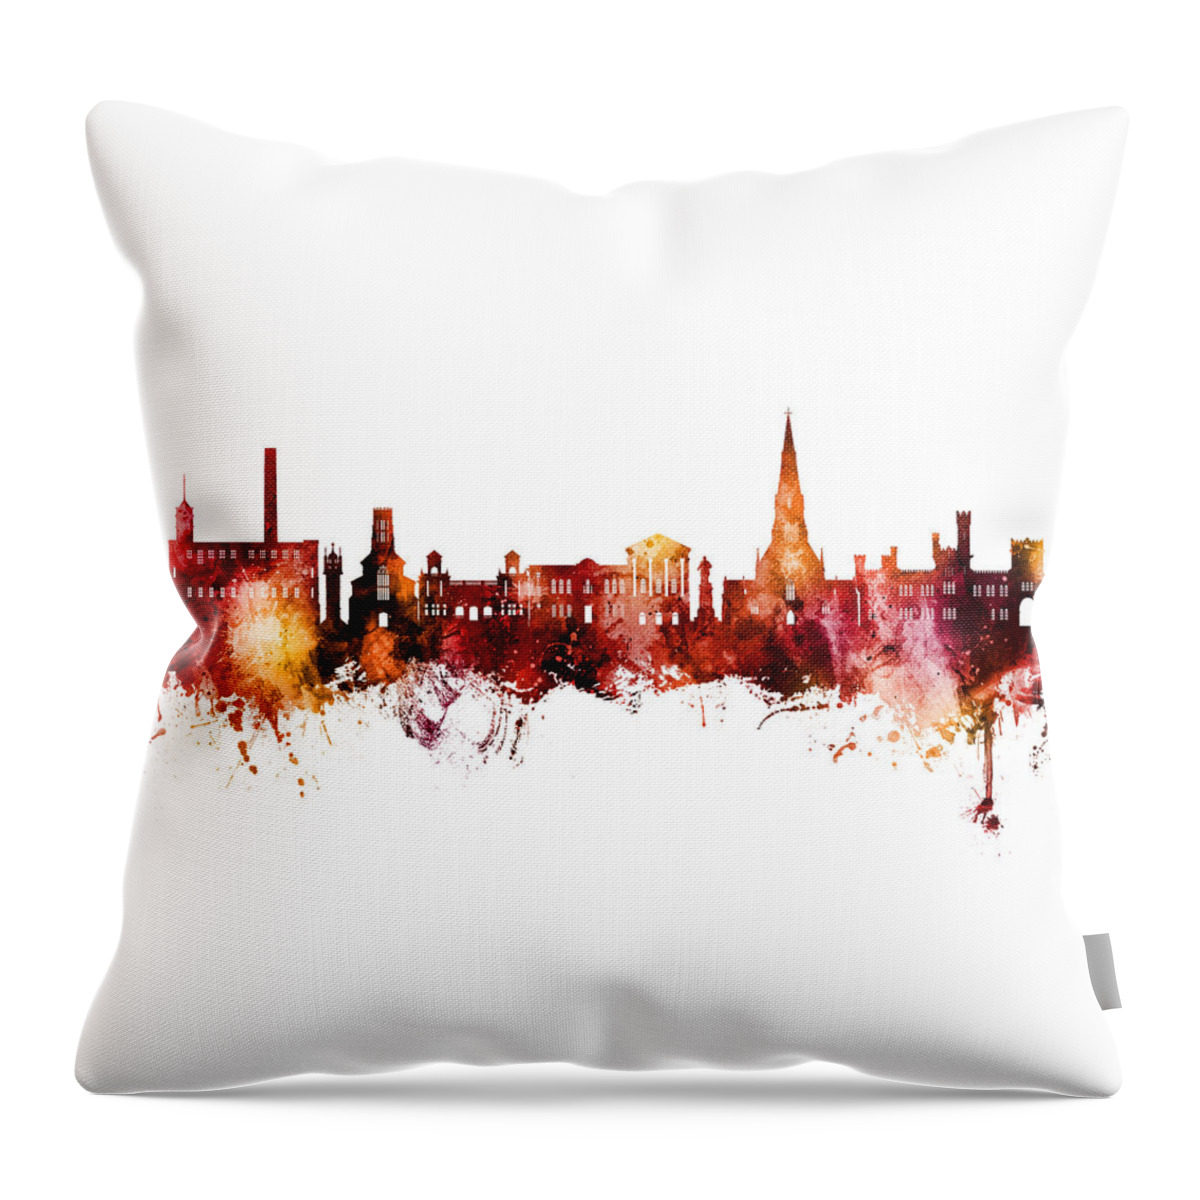 Bury Throw Pillow featuring the digital art Bury England Skyline #32 by Michael Tompsett